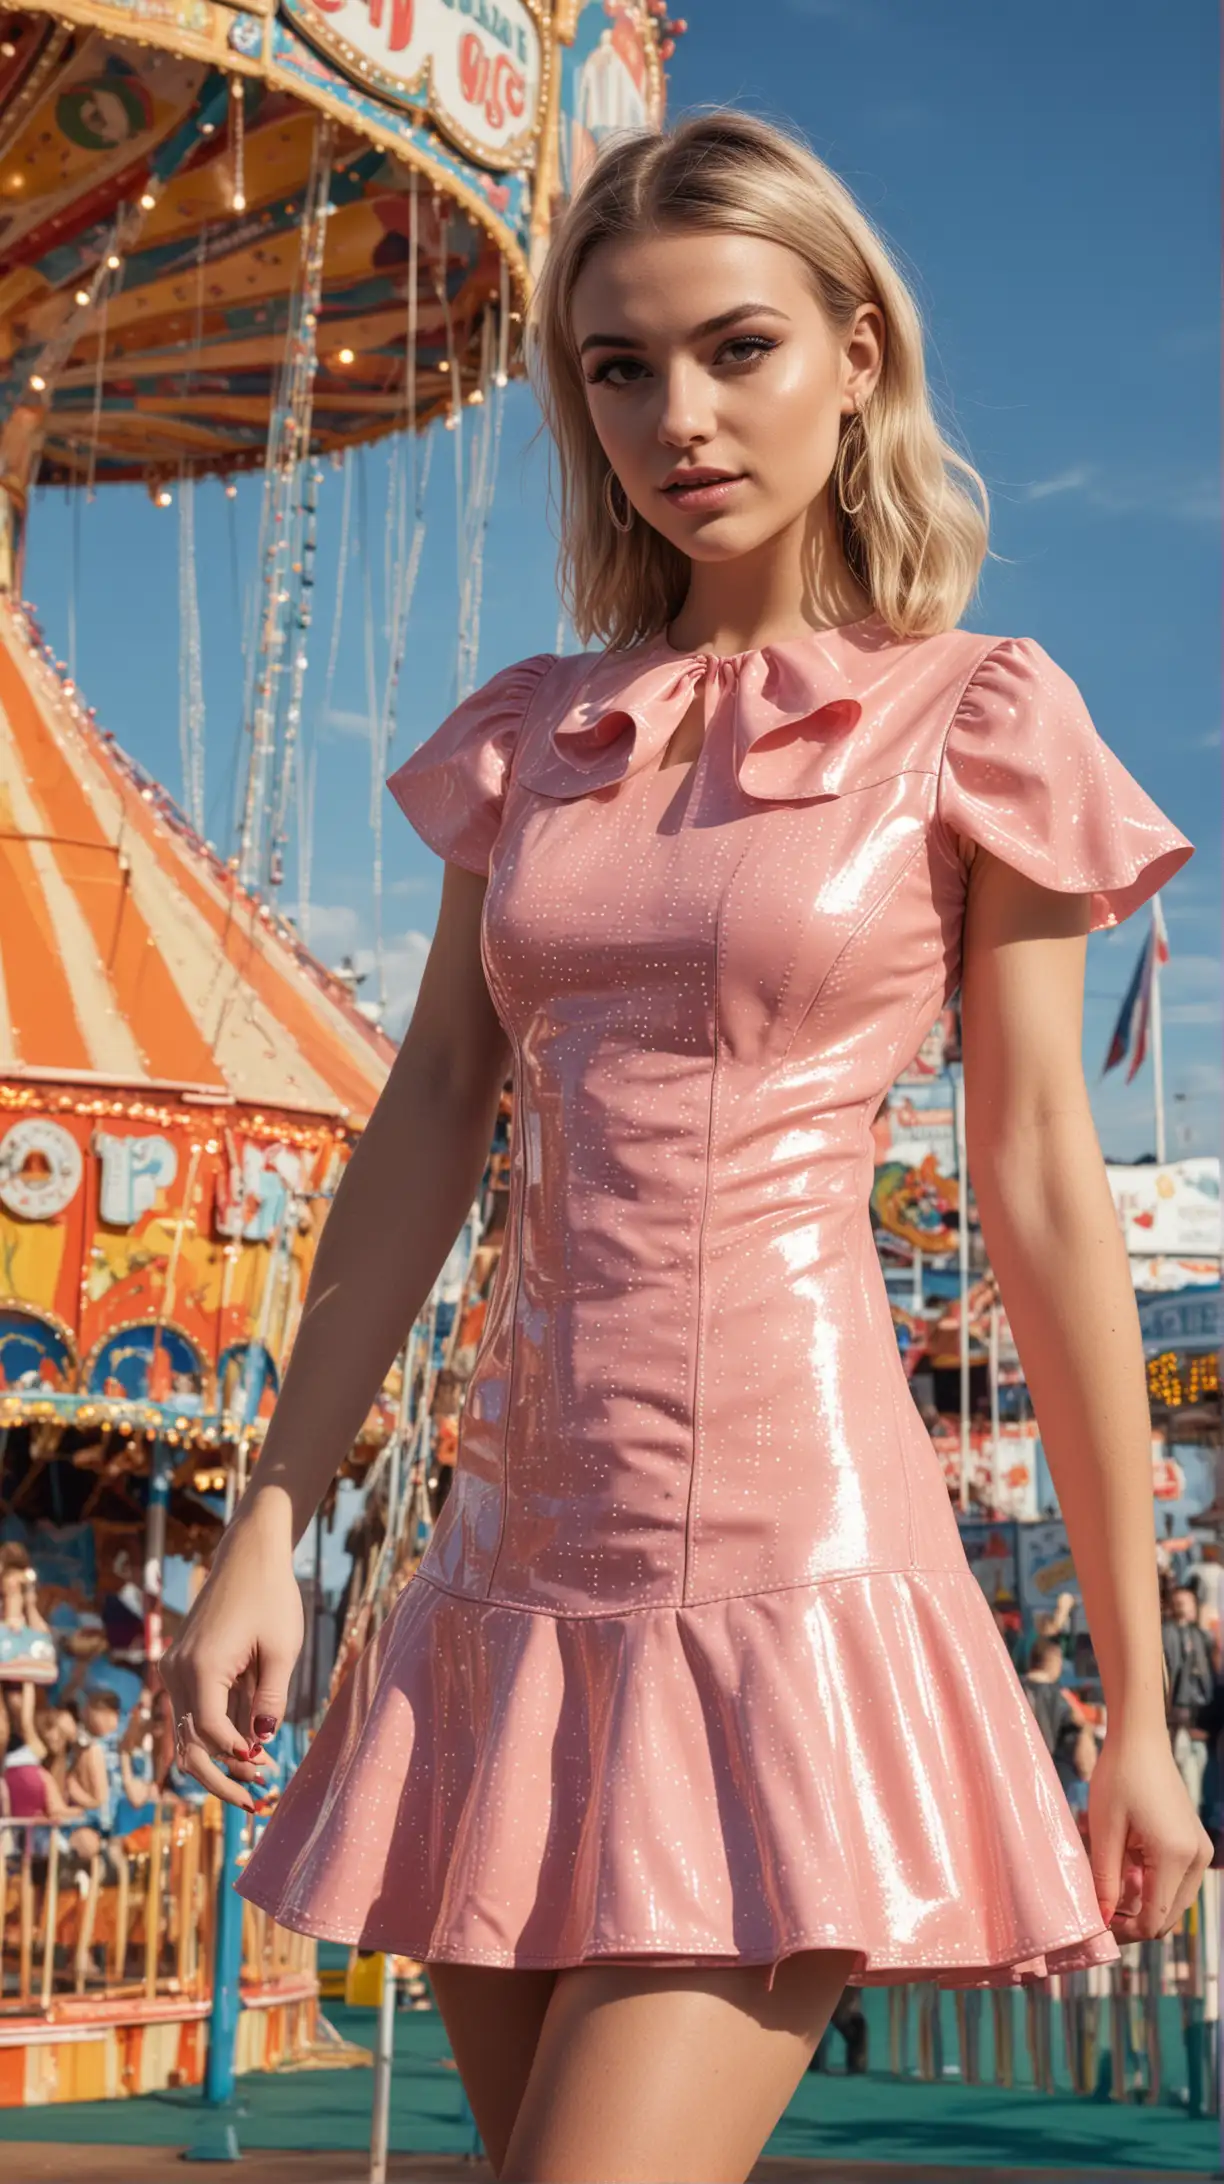 Stylish Woman in Gloss PVC Dress at Fairground